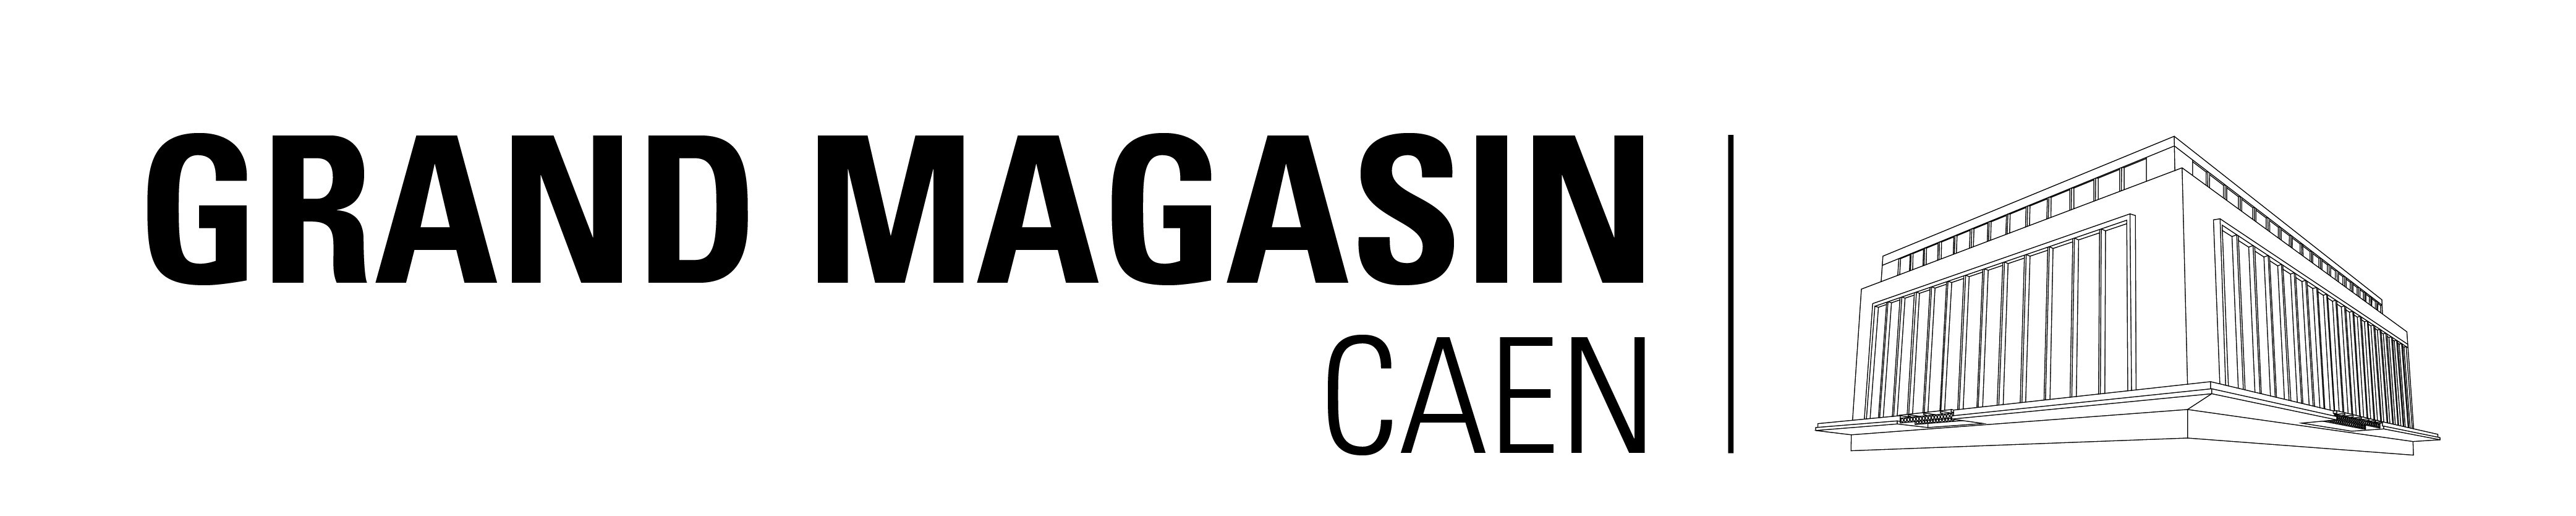 Grand Magasin logo